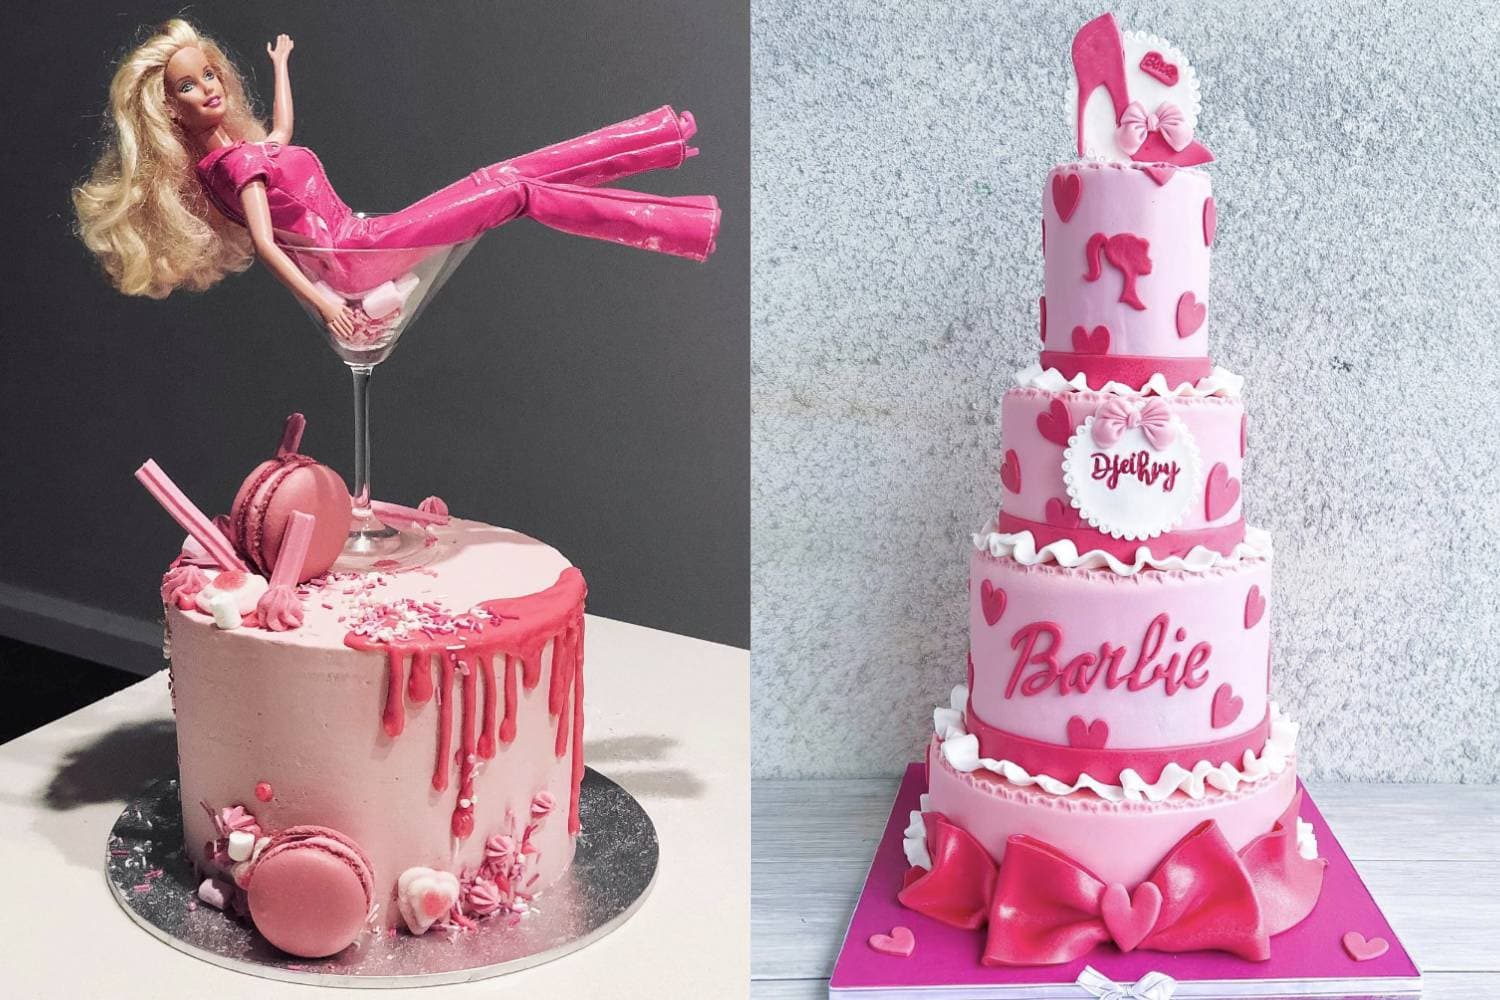 Best Barbie/ Doll Cake In Gurgaon | Order Online